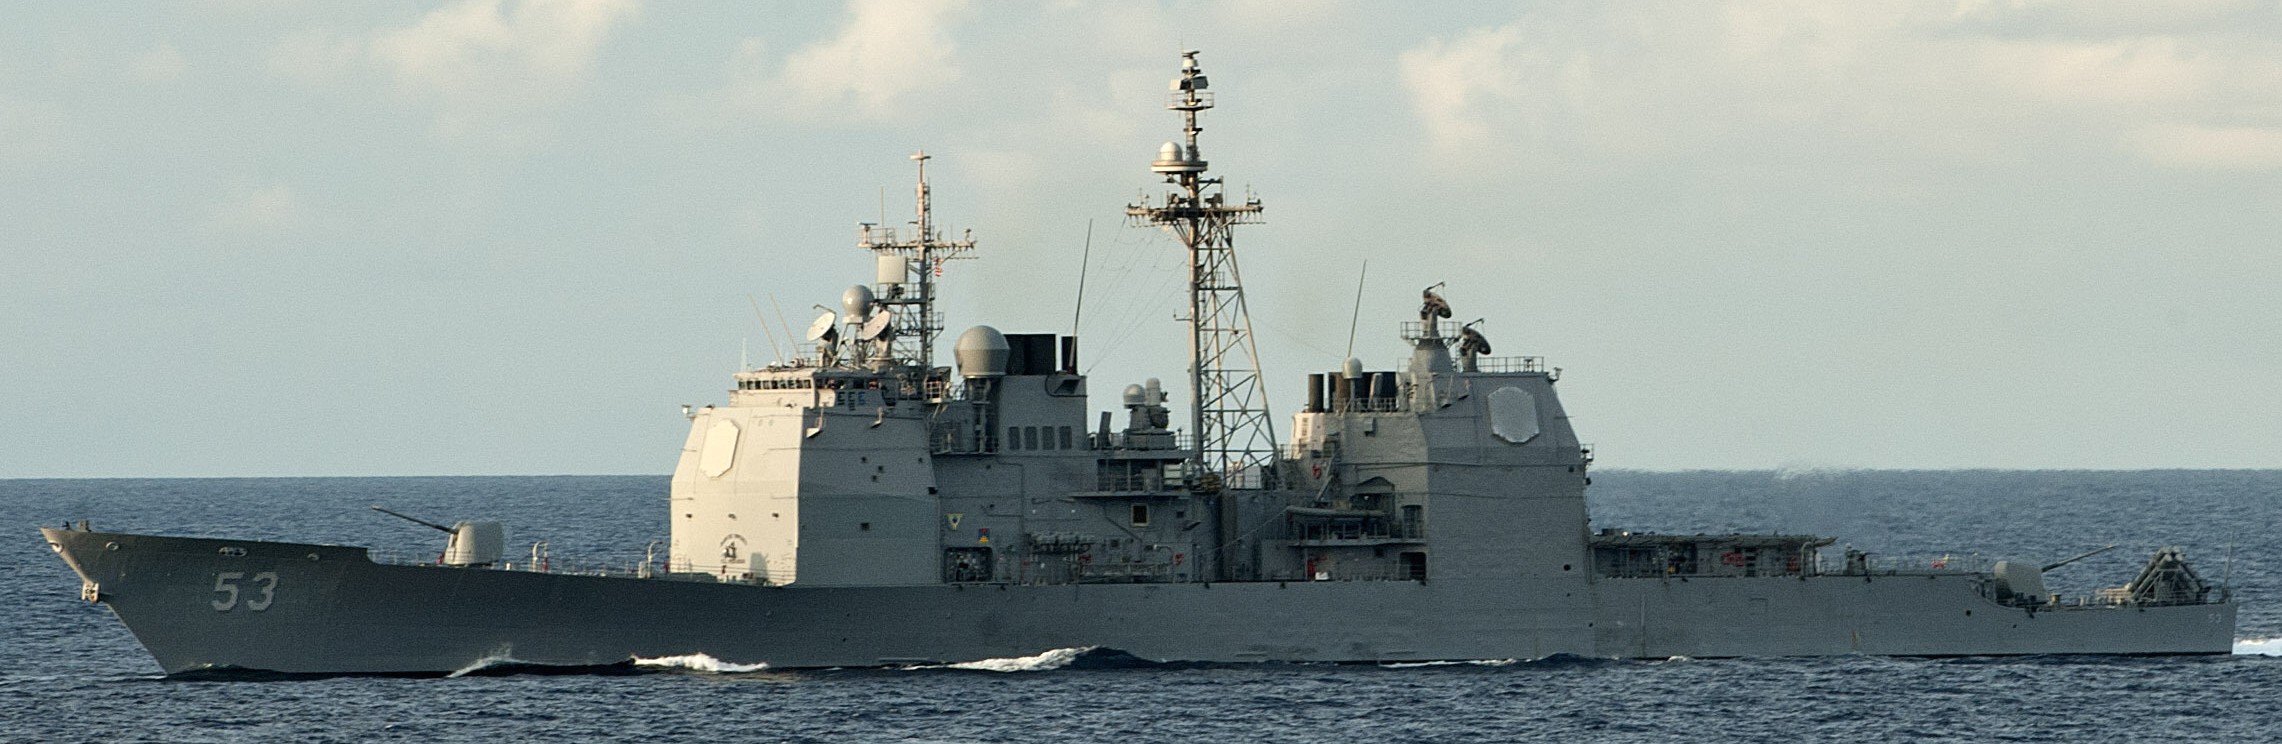 cg-53 uss mobile bay ticonderoga class guided missile cruiser aegis us navy andaman sea 58